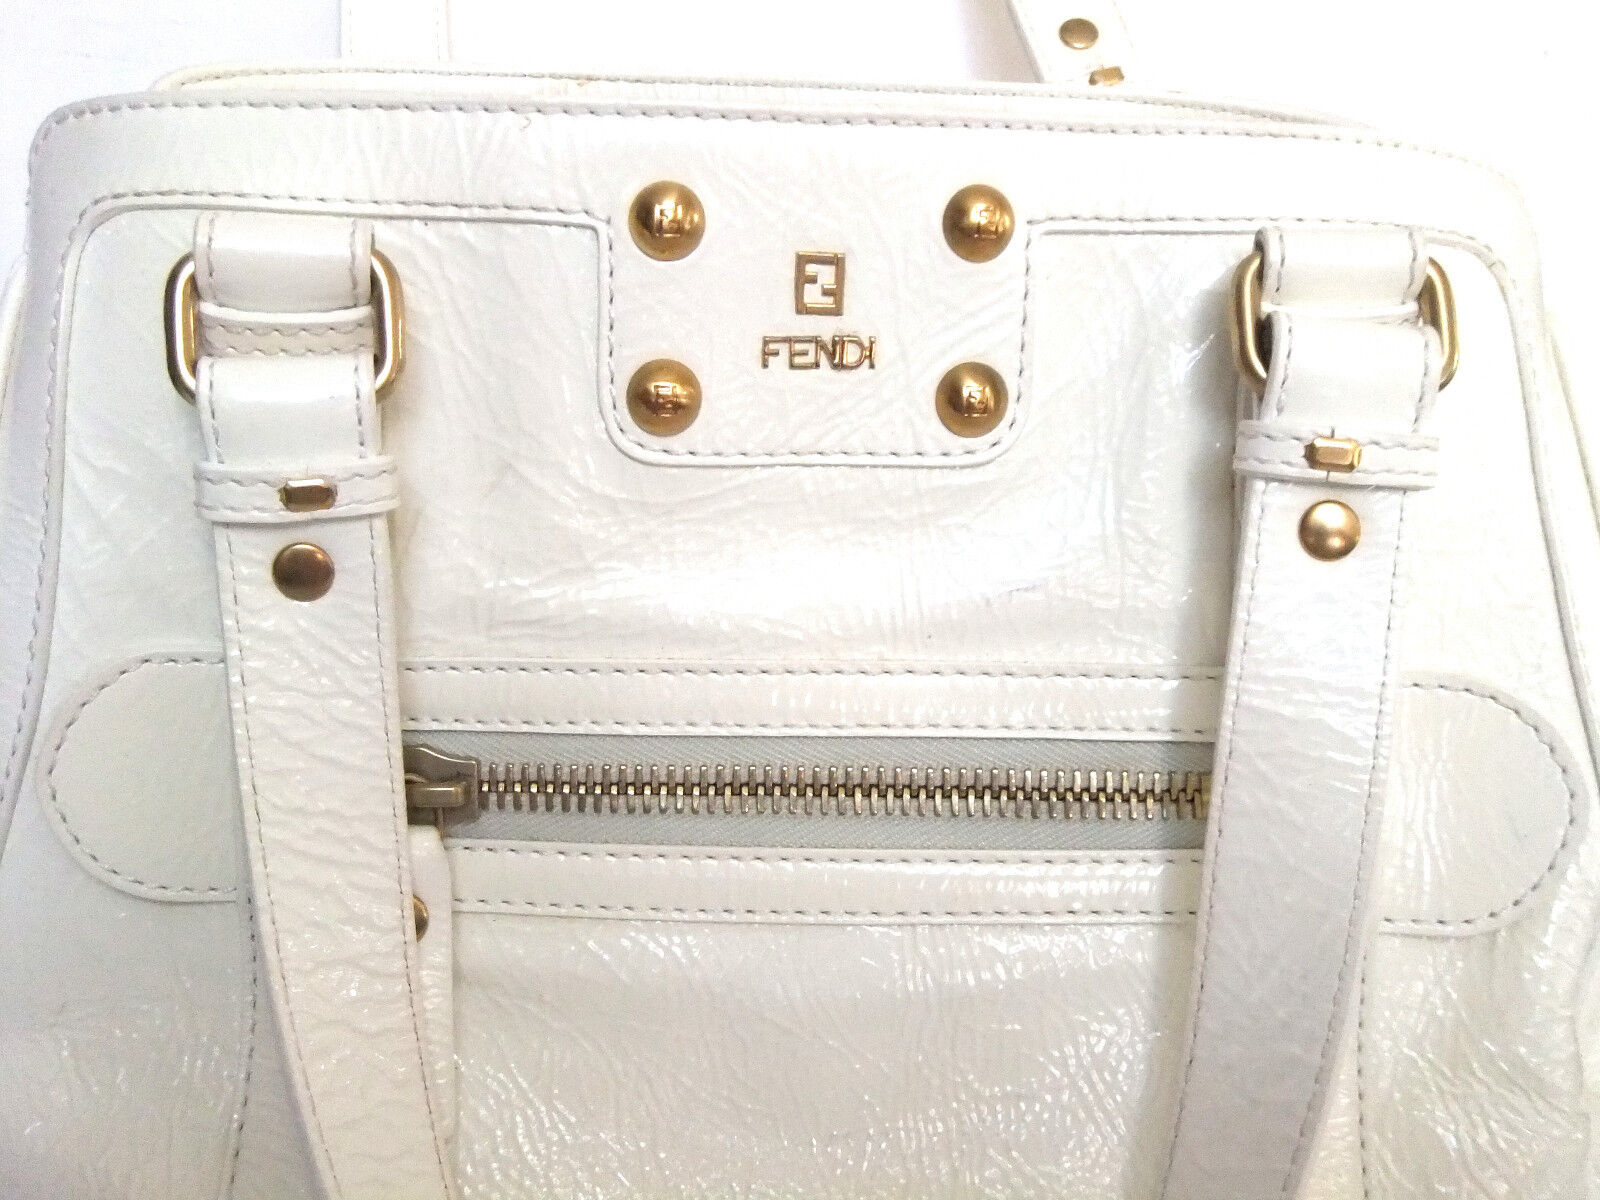 FENDI White Patent Leather Large *Borsa De Jour* Tote/Shoulder Bag, Italy,  $1595